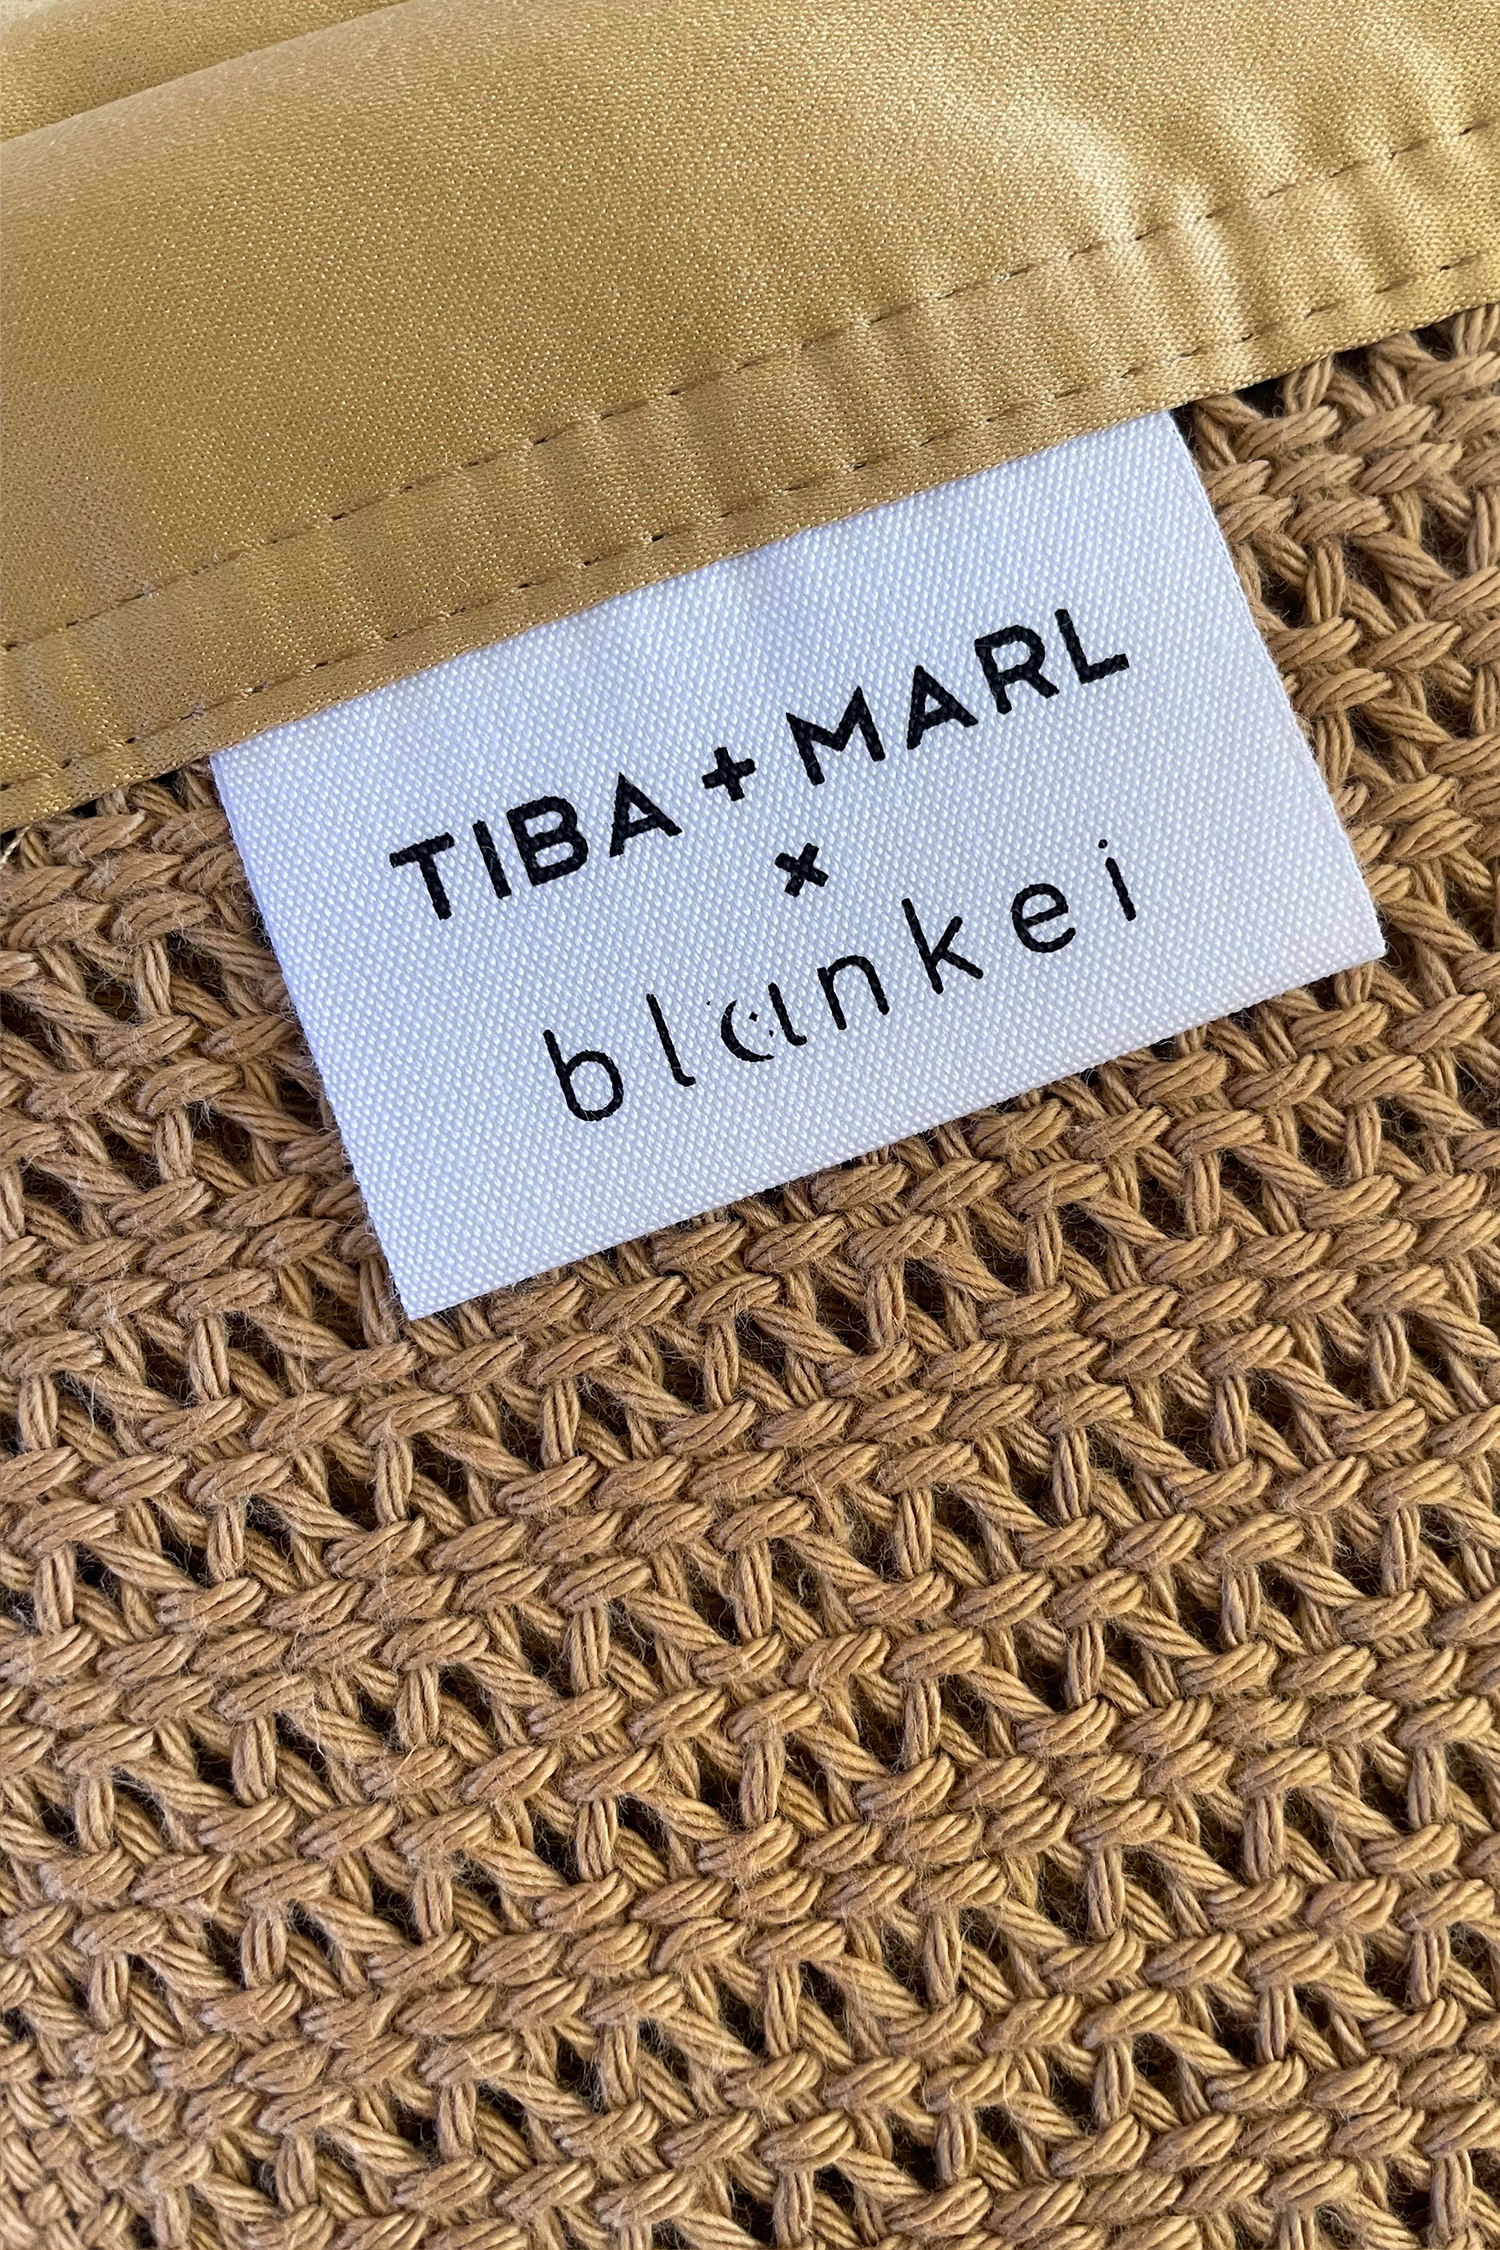 T+M x Blankei Organic Cotton Cellular Blanket Caramel